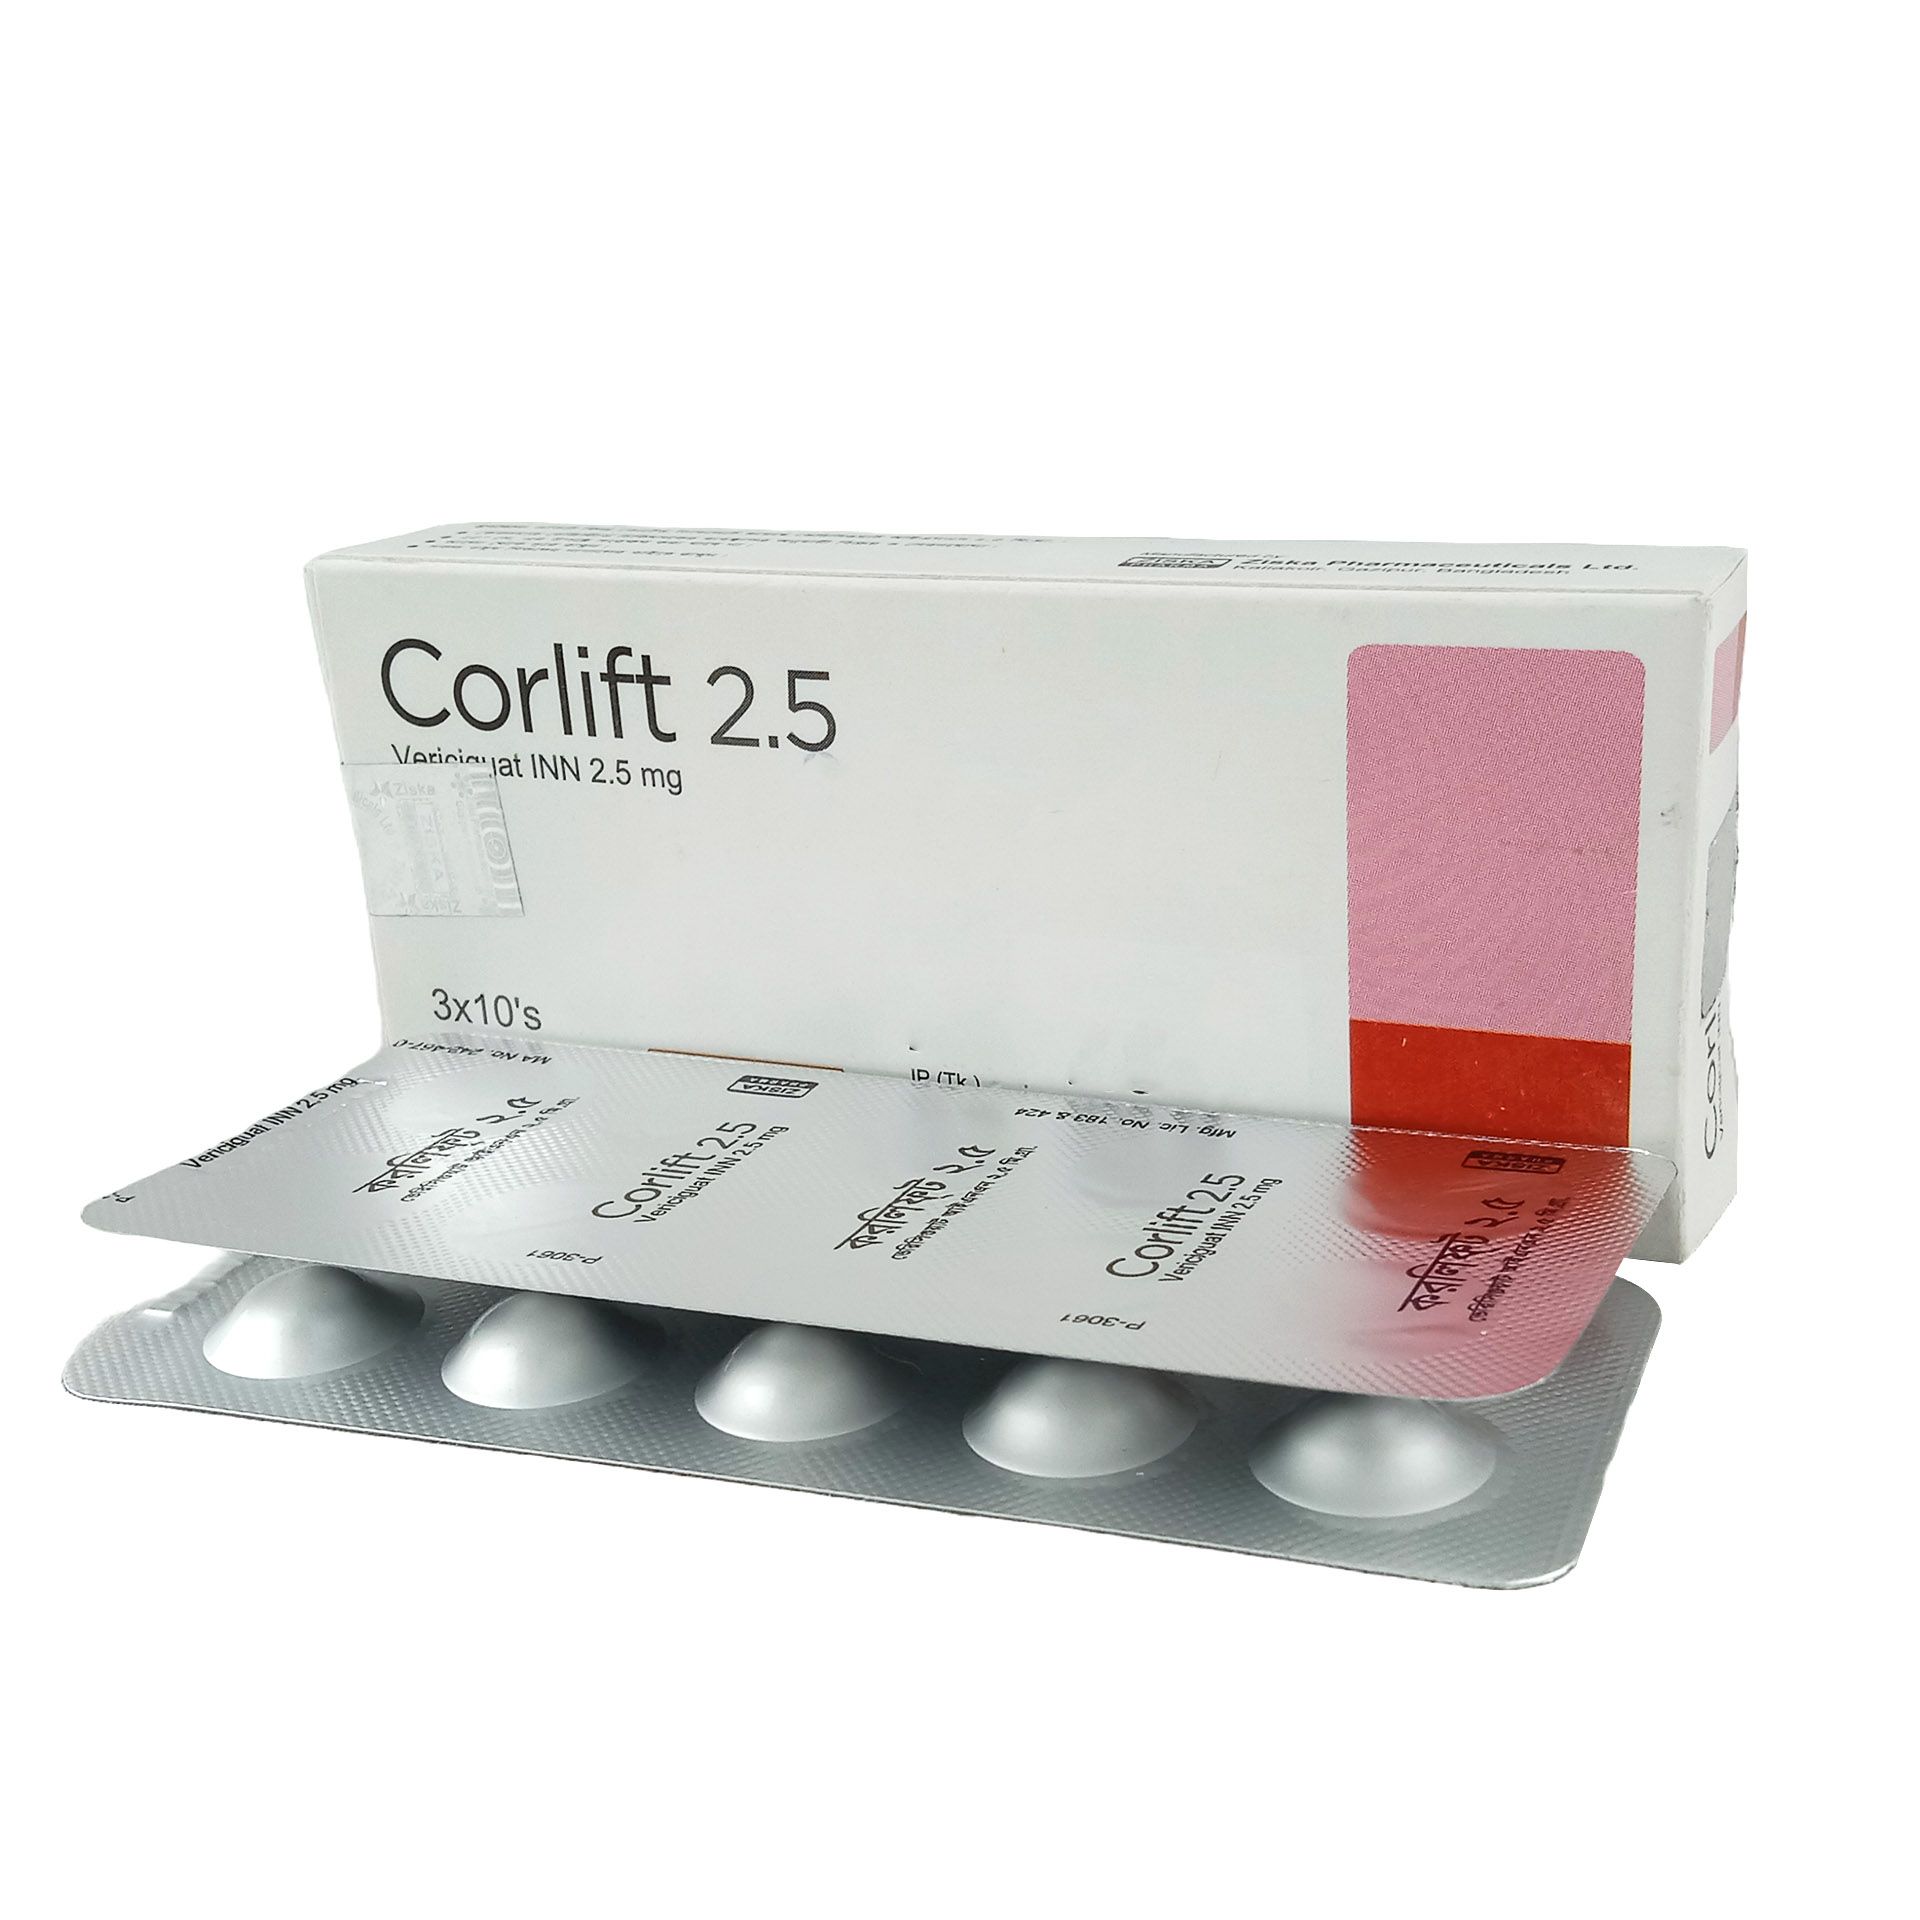 Corlift 2.5 2.5mg Tablet